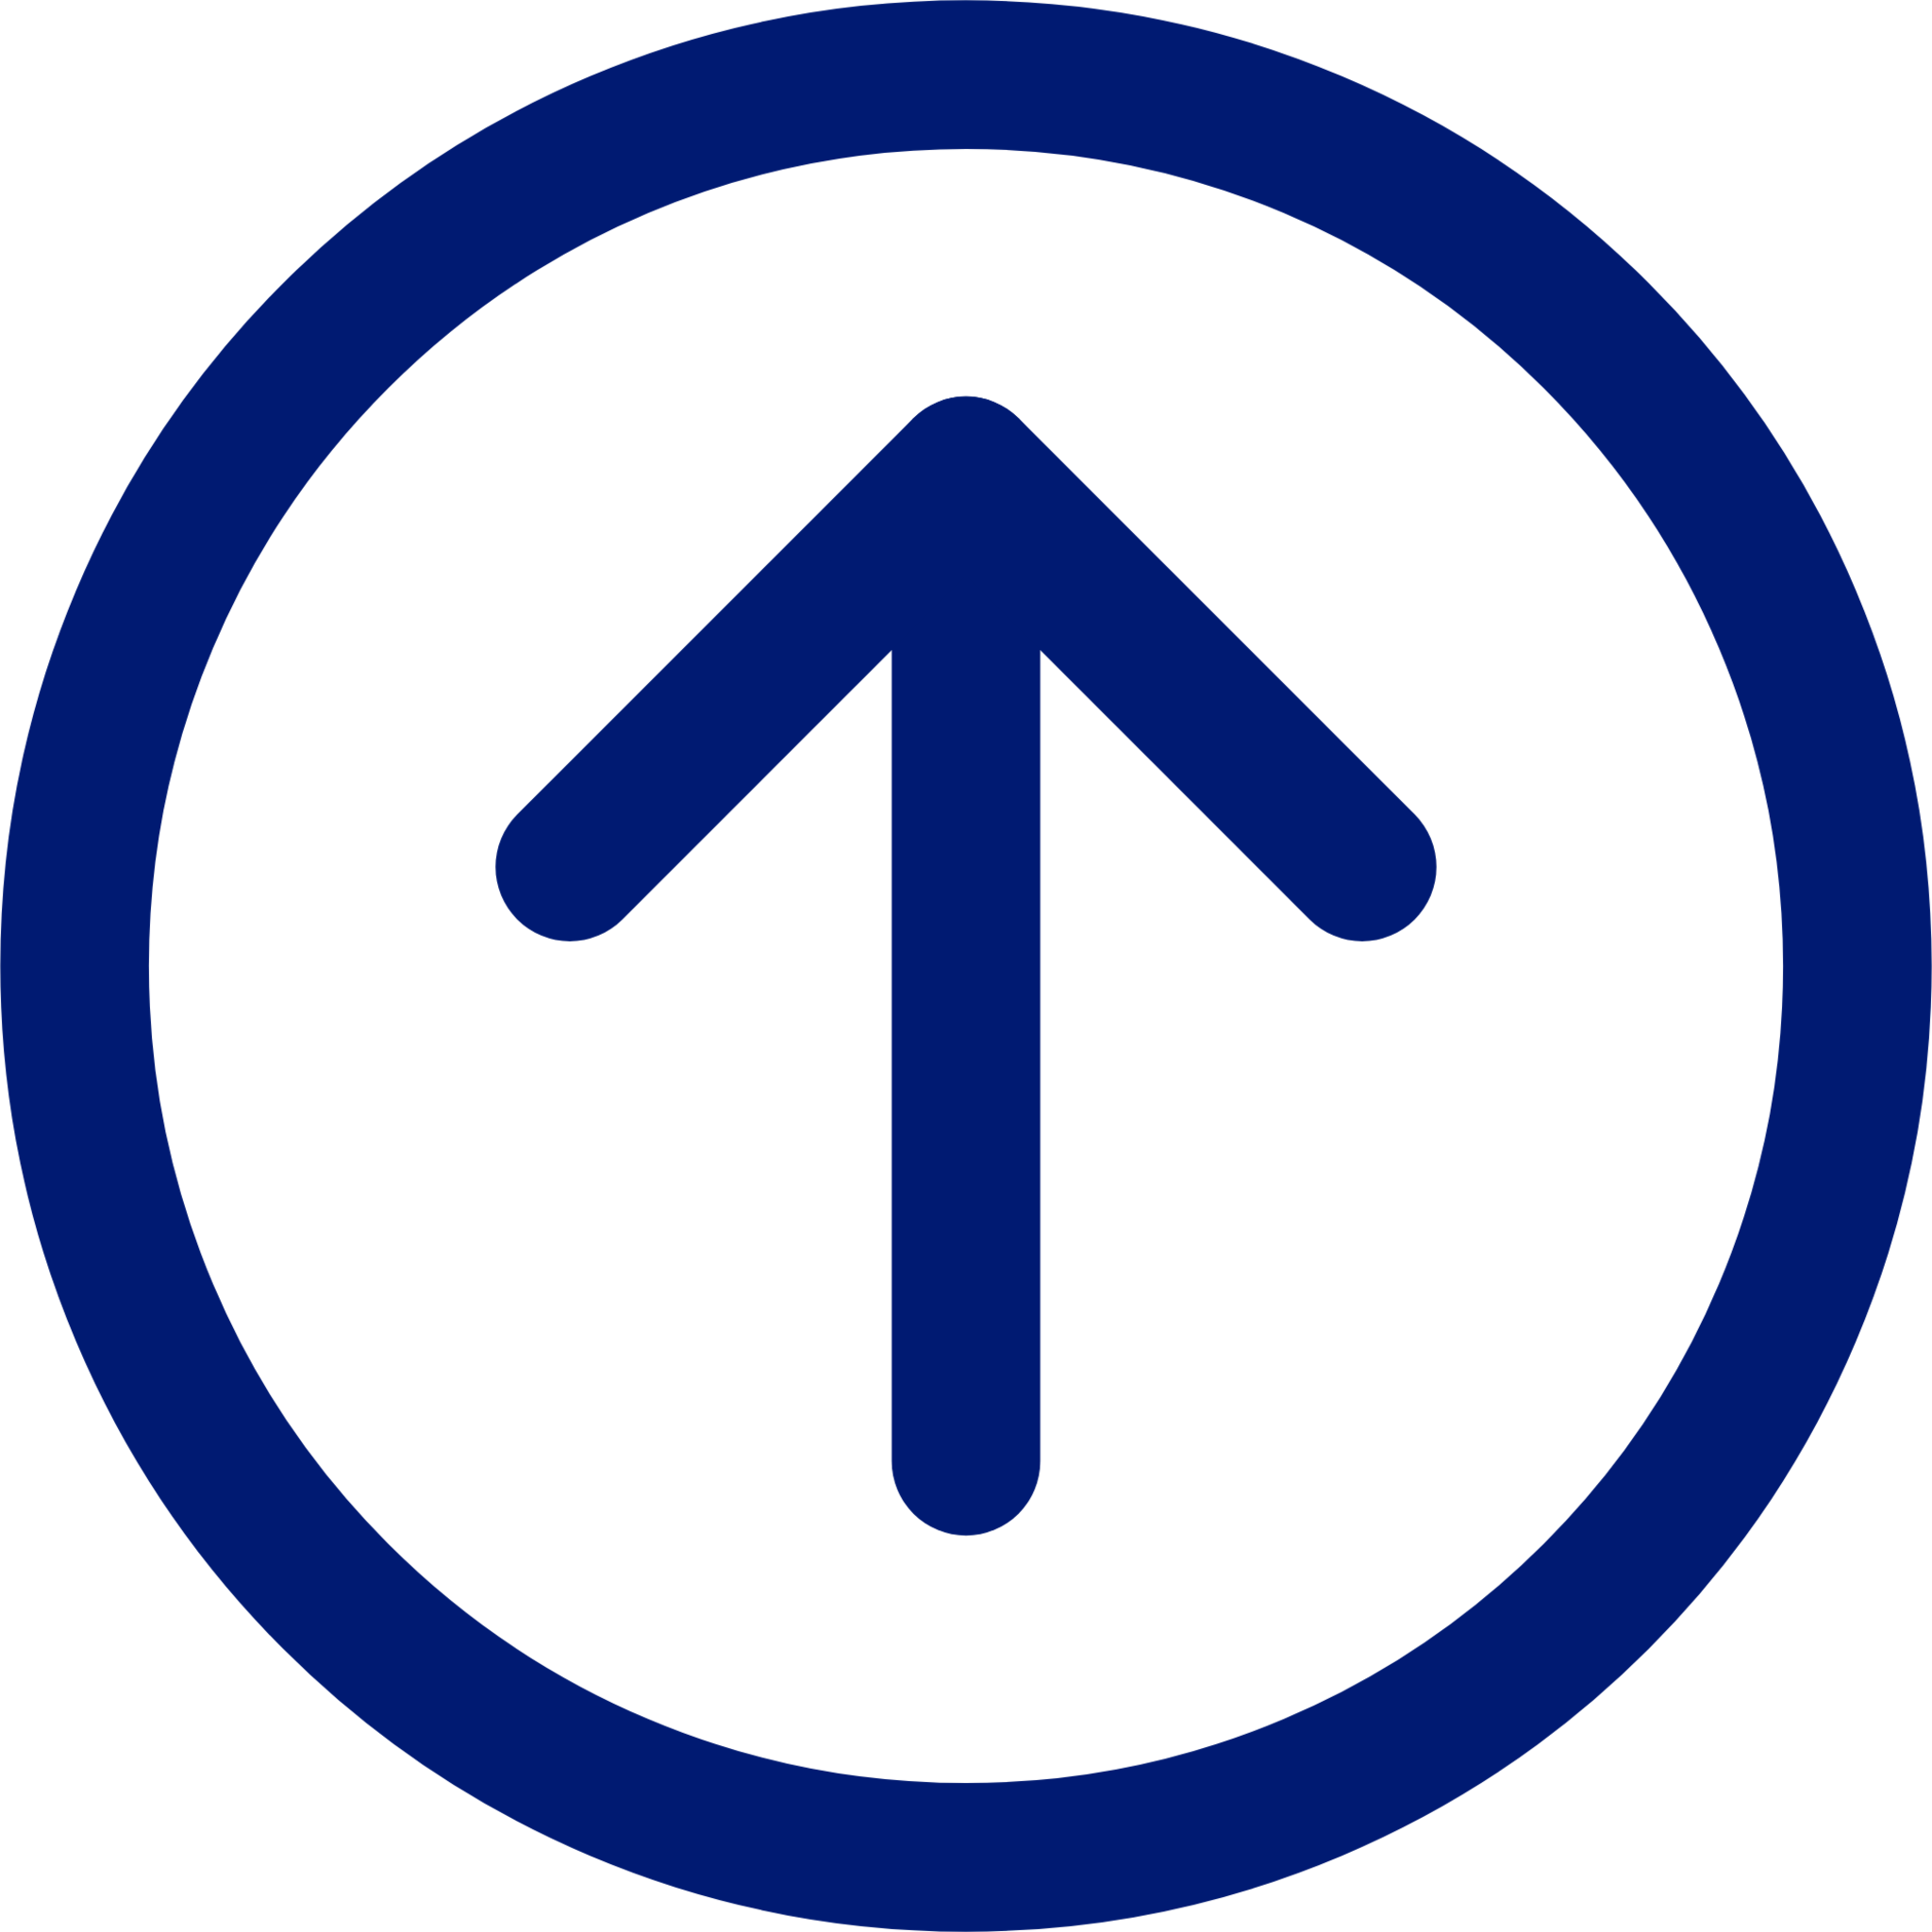 arrow circle up icon